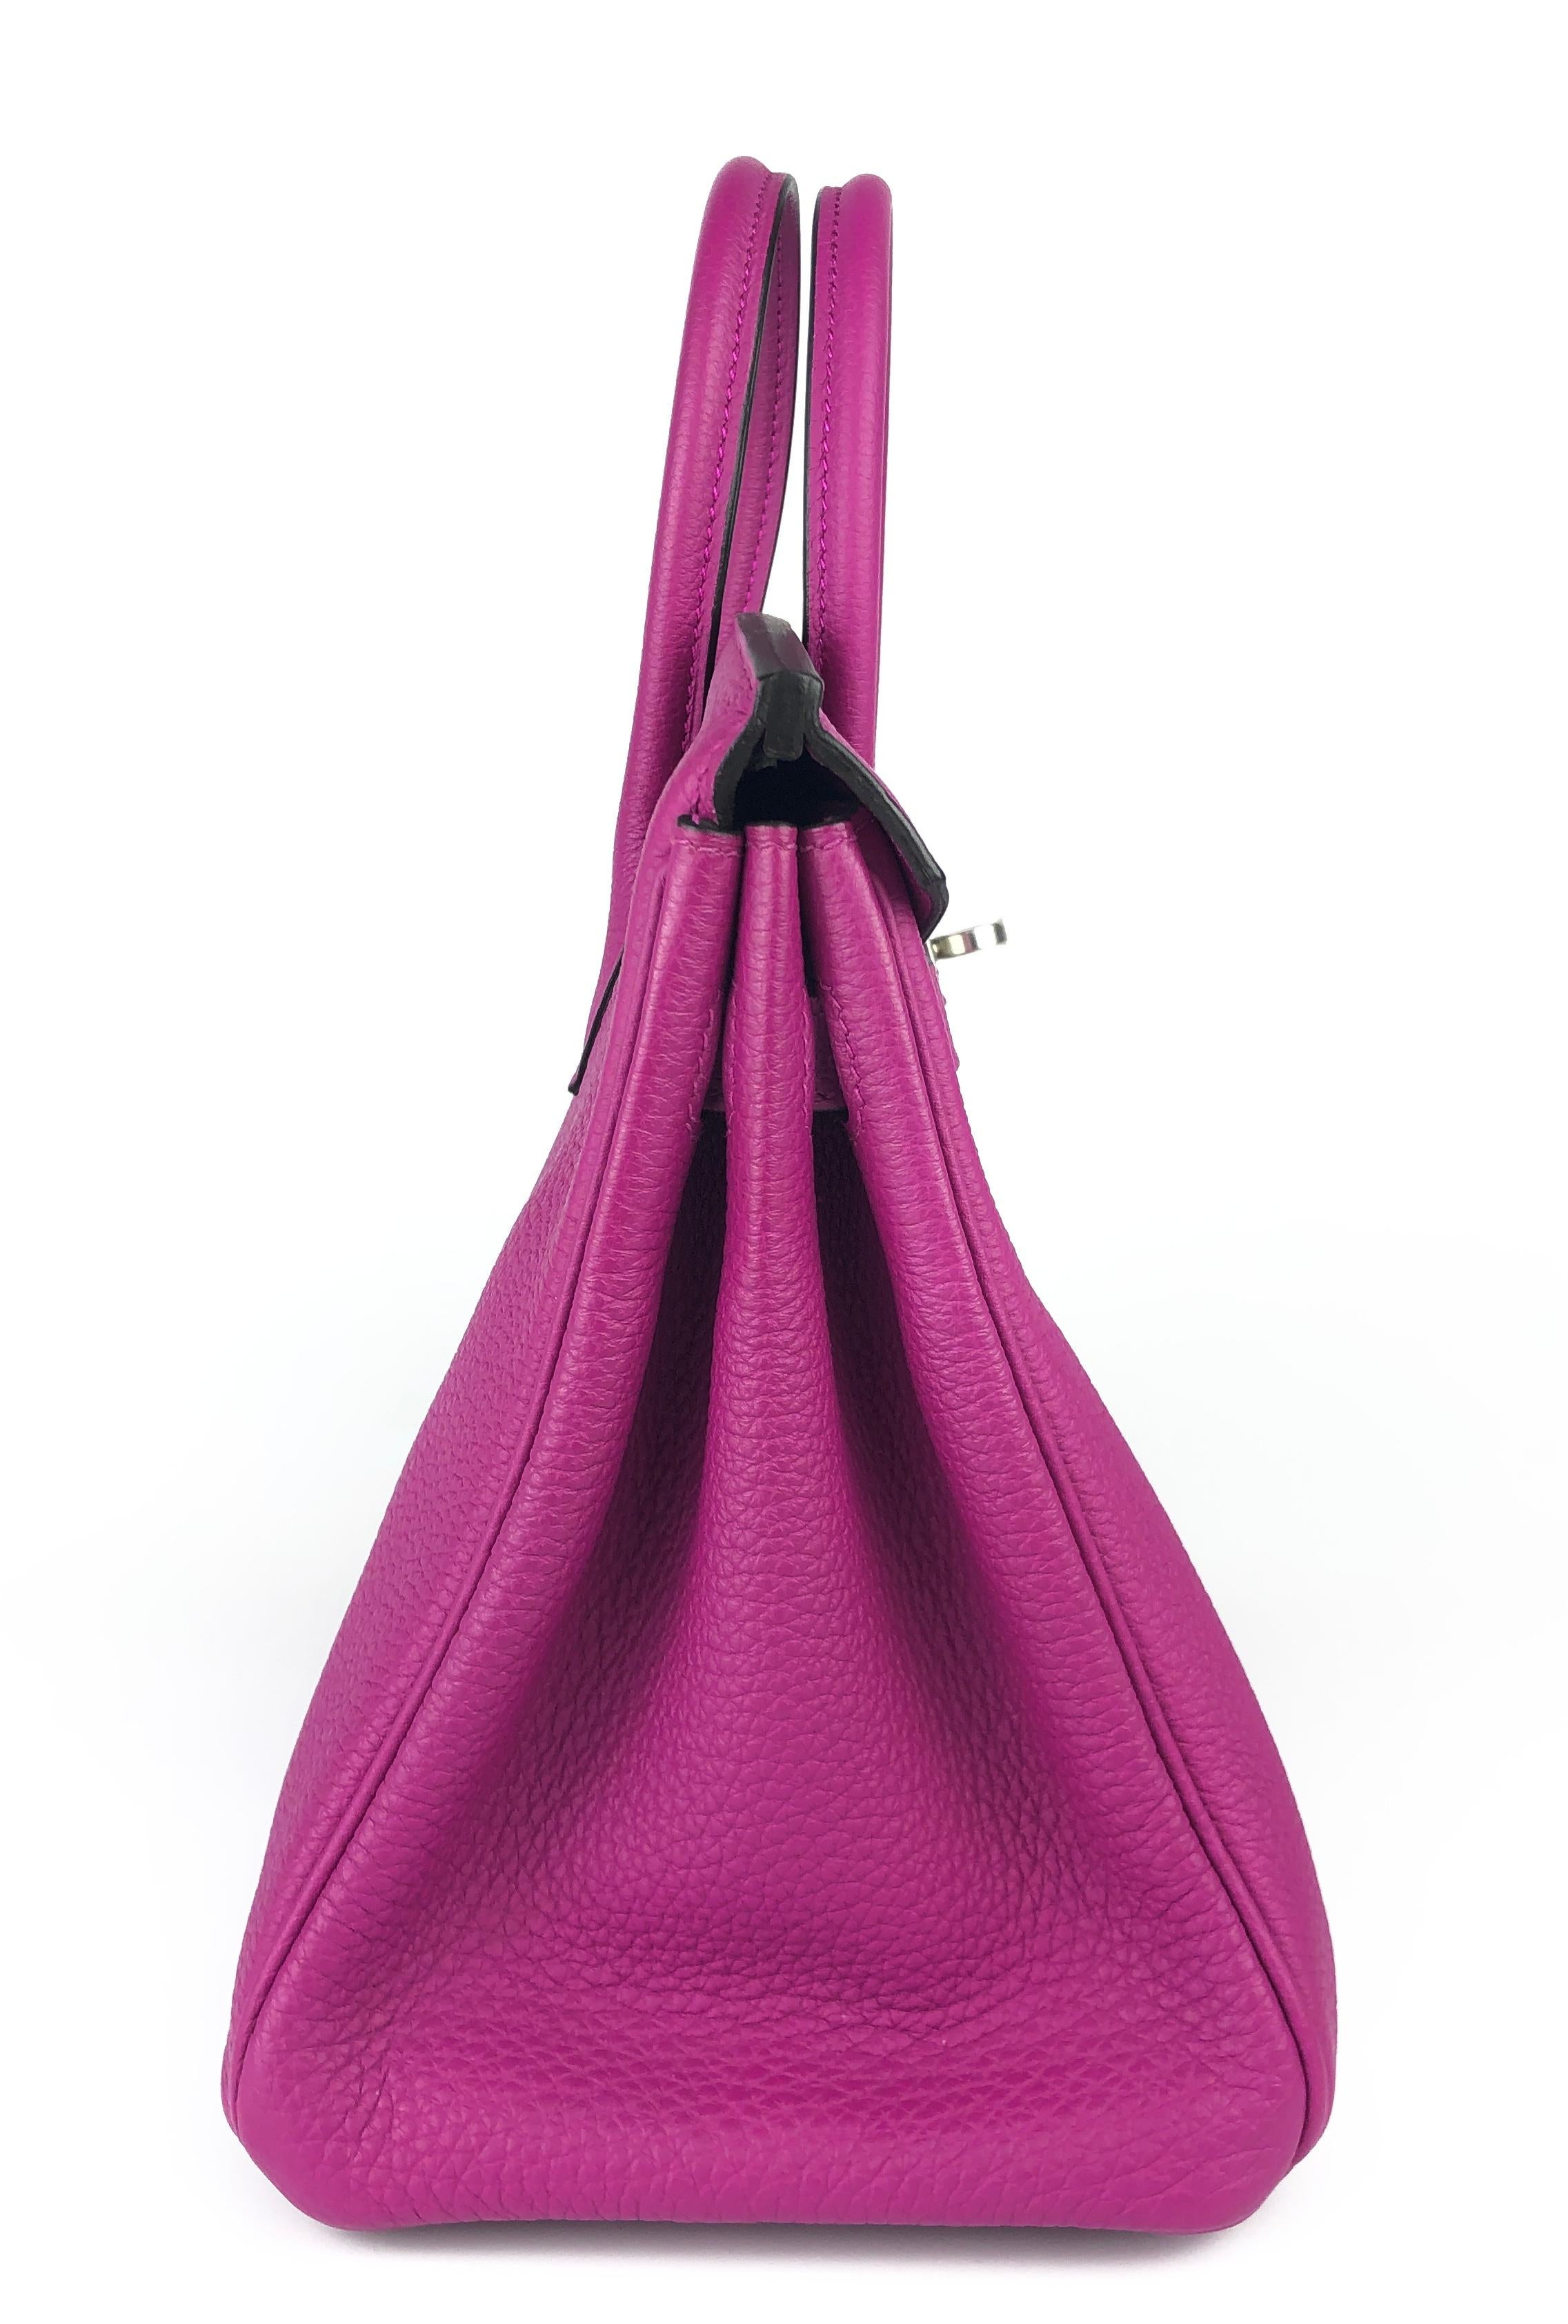 Hermes Birkin 25 Rose Pourpre Pink Purple Togo Handbag Palladium Hardware NEW For Sale 2